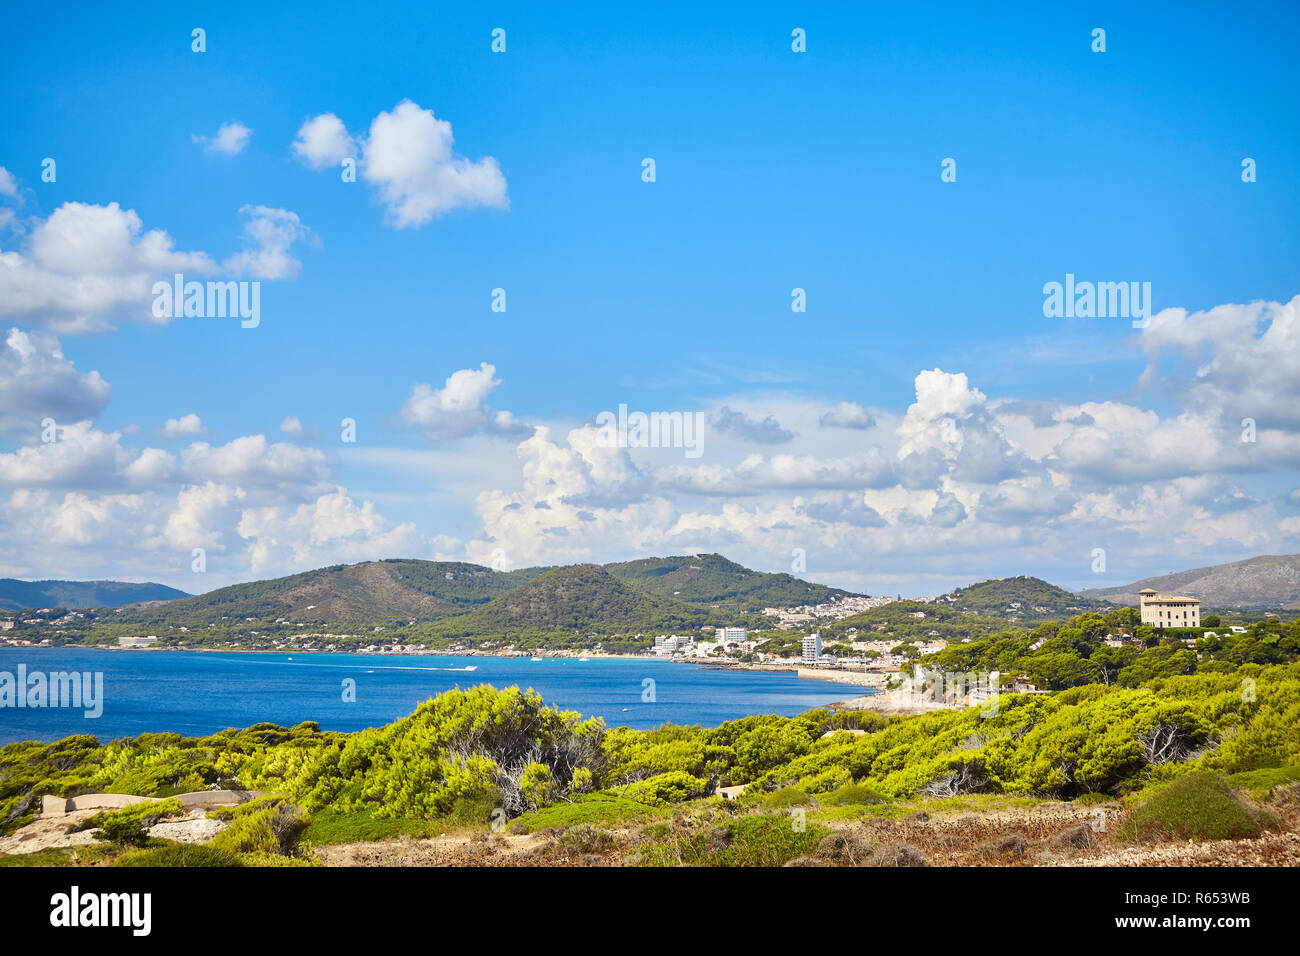 Scenic landscape of Capdepera region, Mallorca, Spain. Stock Photo